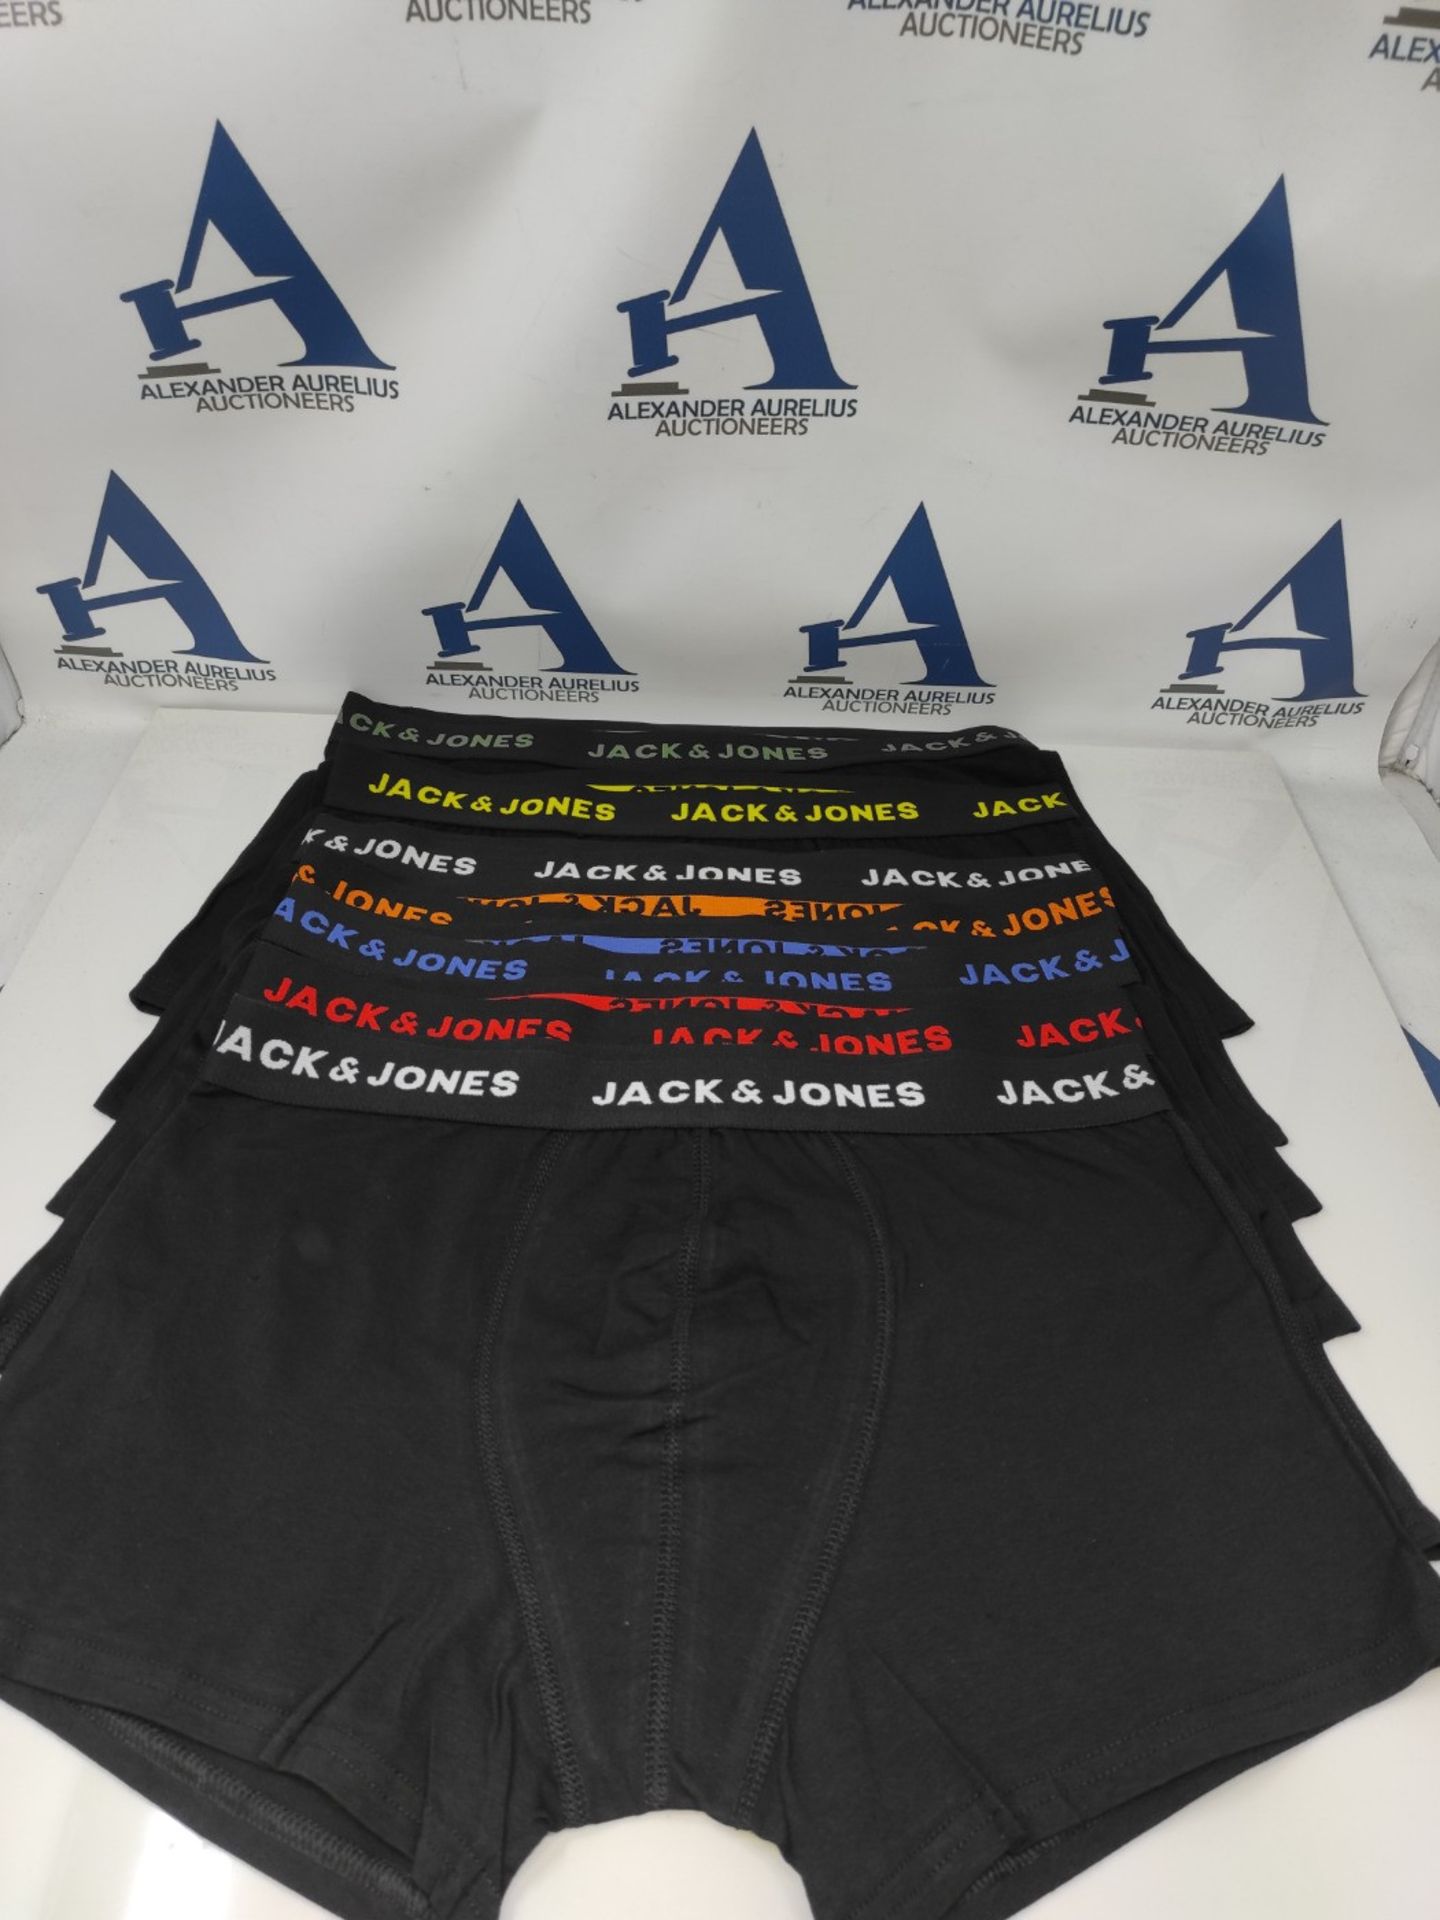 JACK & JONES Boxers Pack of 7 Boxers Black l Black l - Image 2 of 2